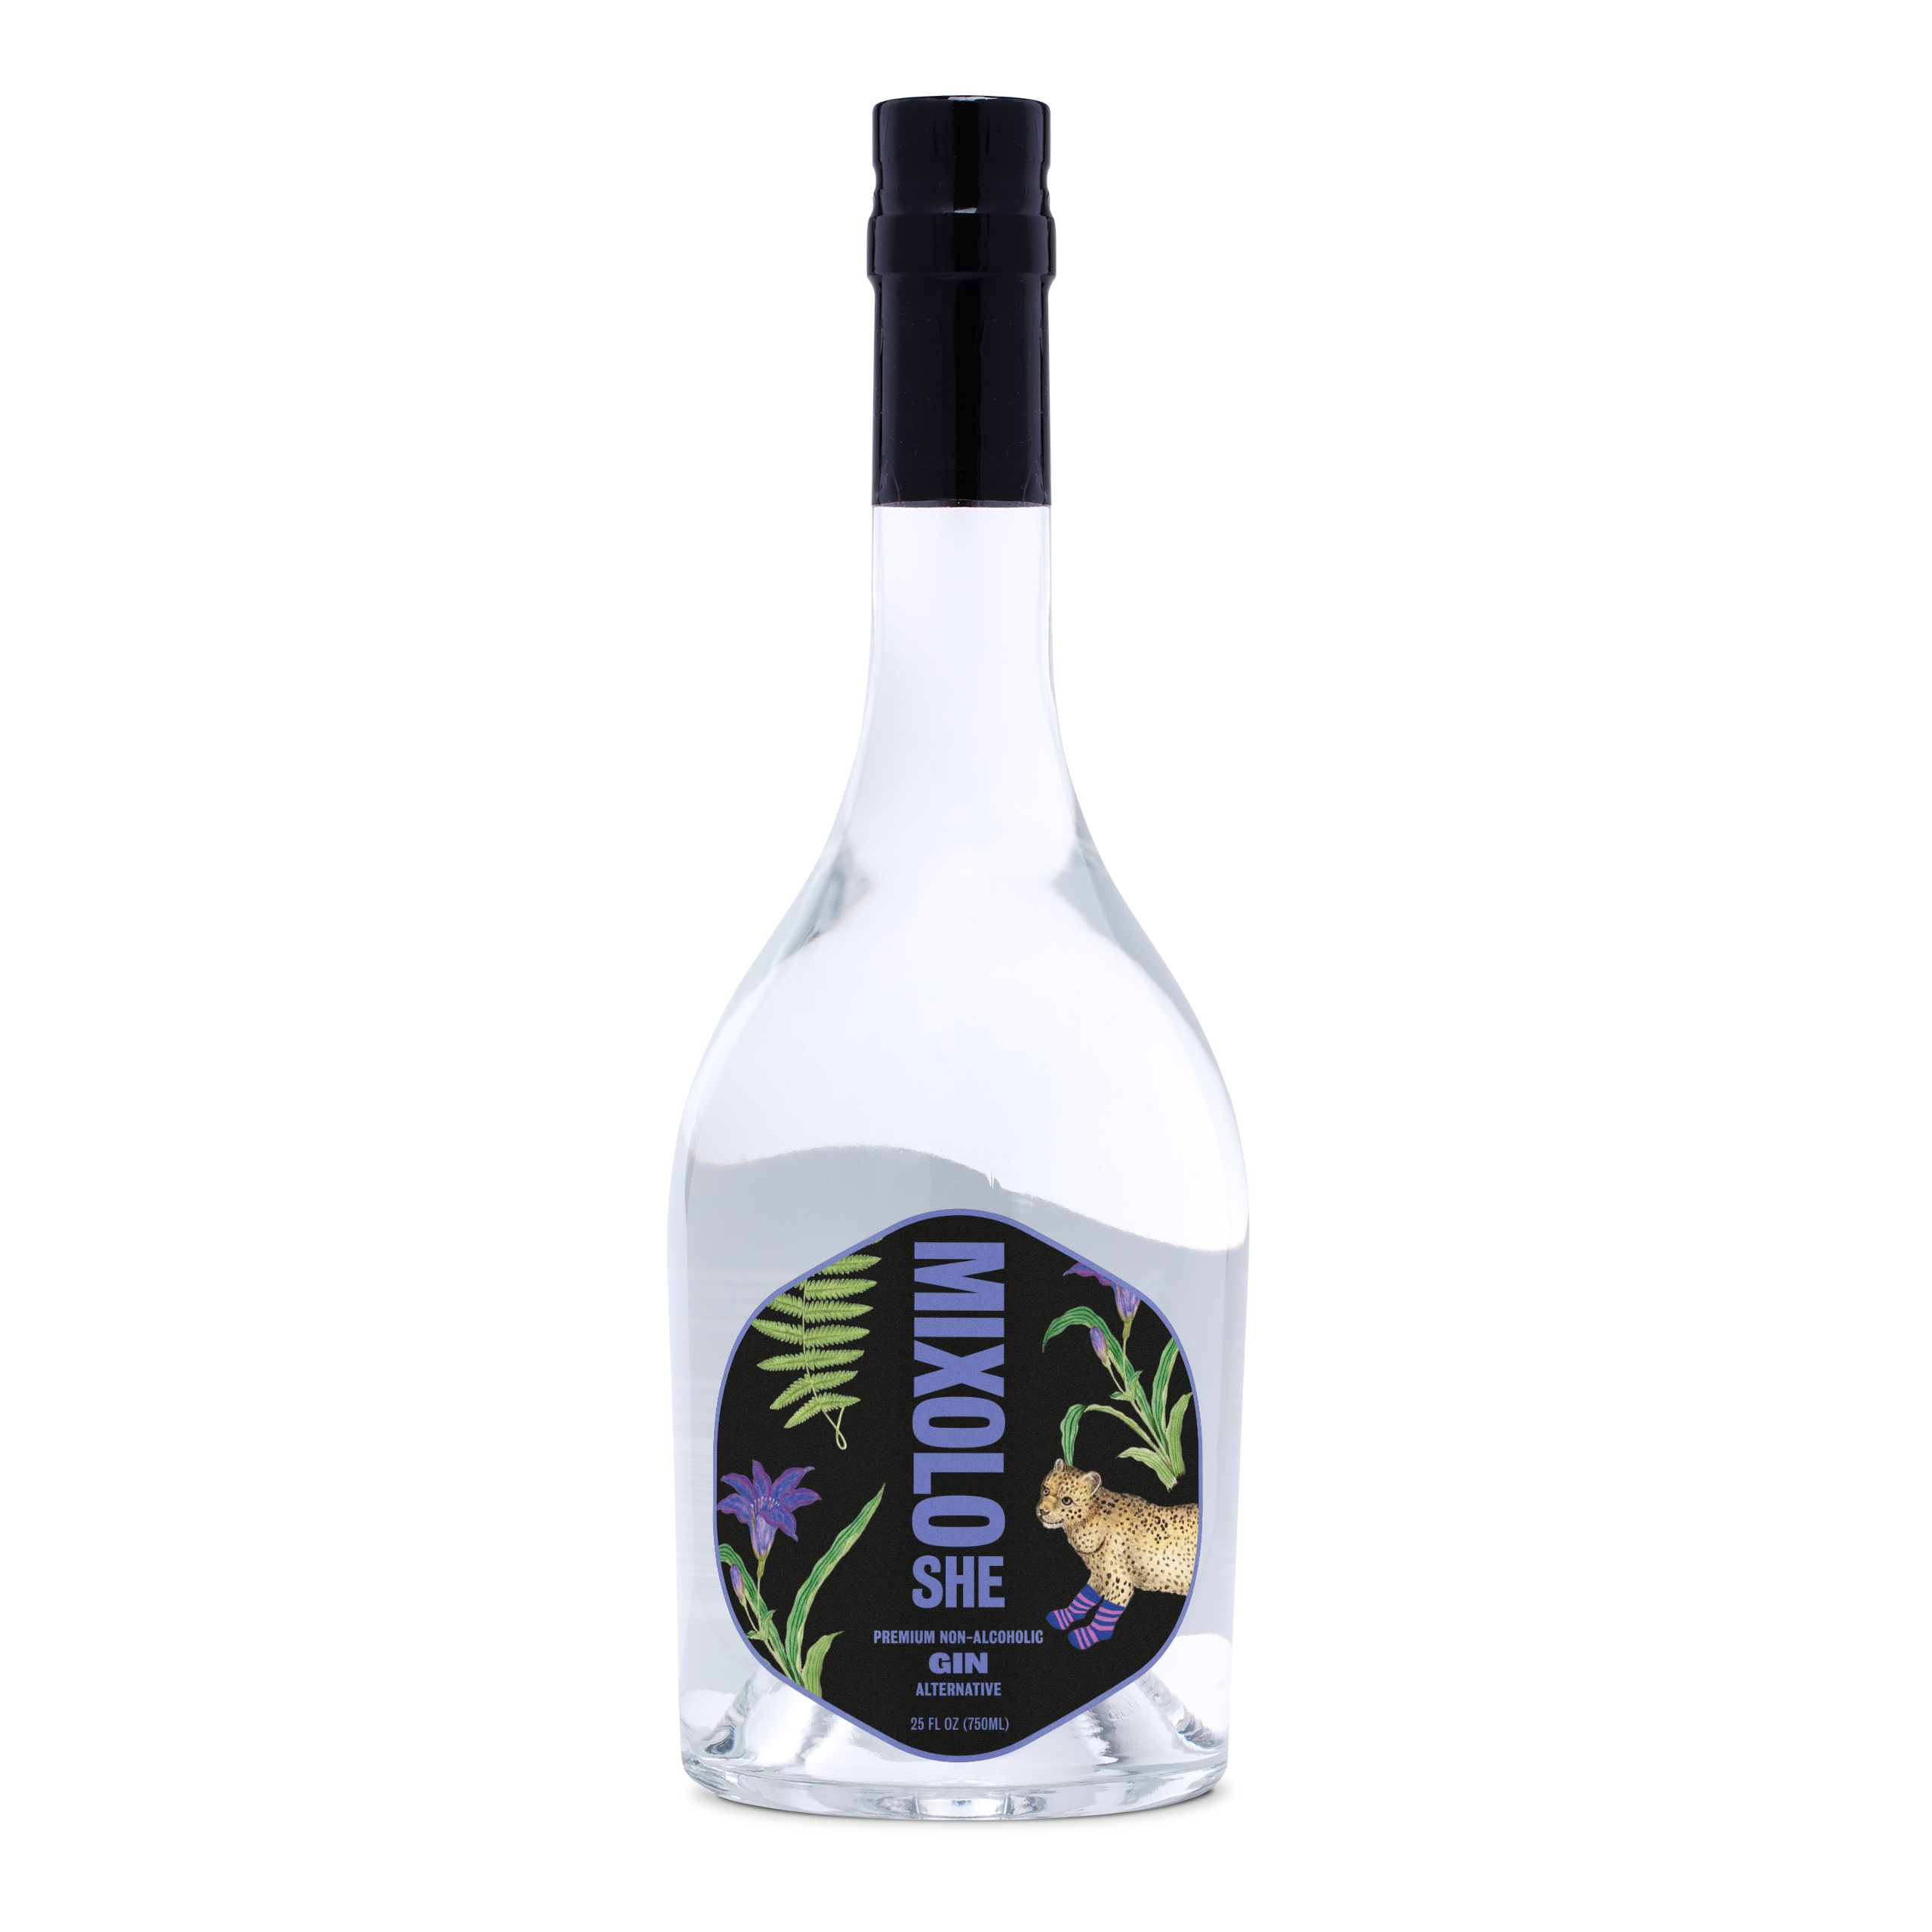 Mixoloshe Premium Non Alcoholic Gin Bottle Low Calorie Awarded Taste